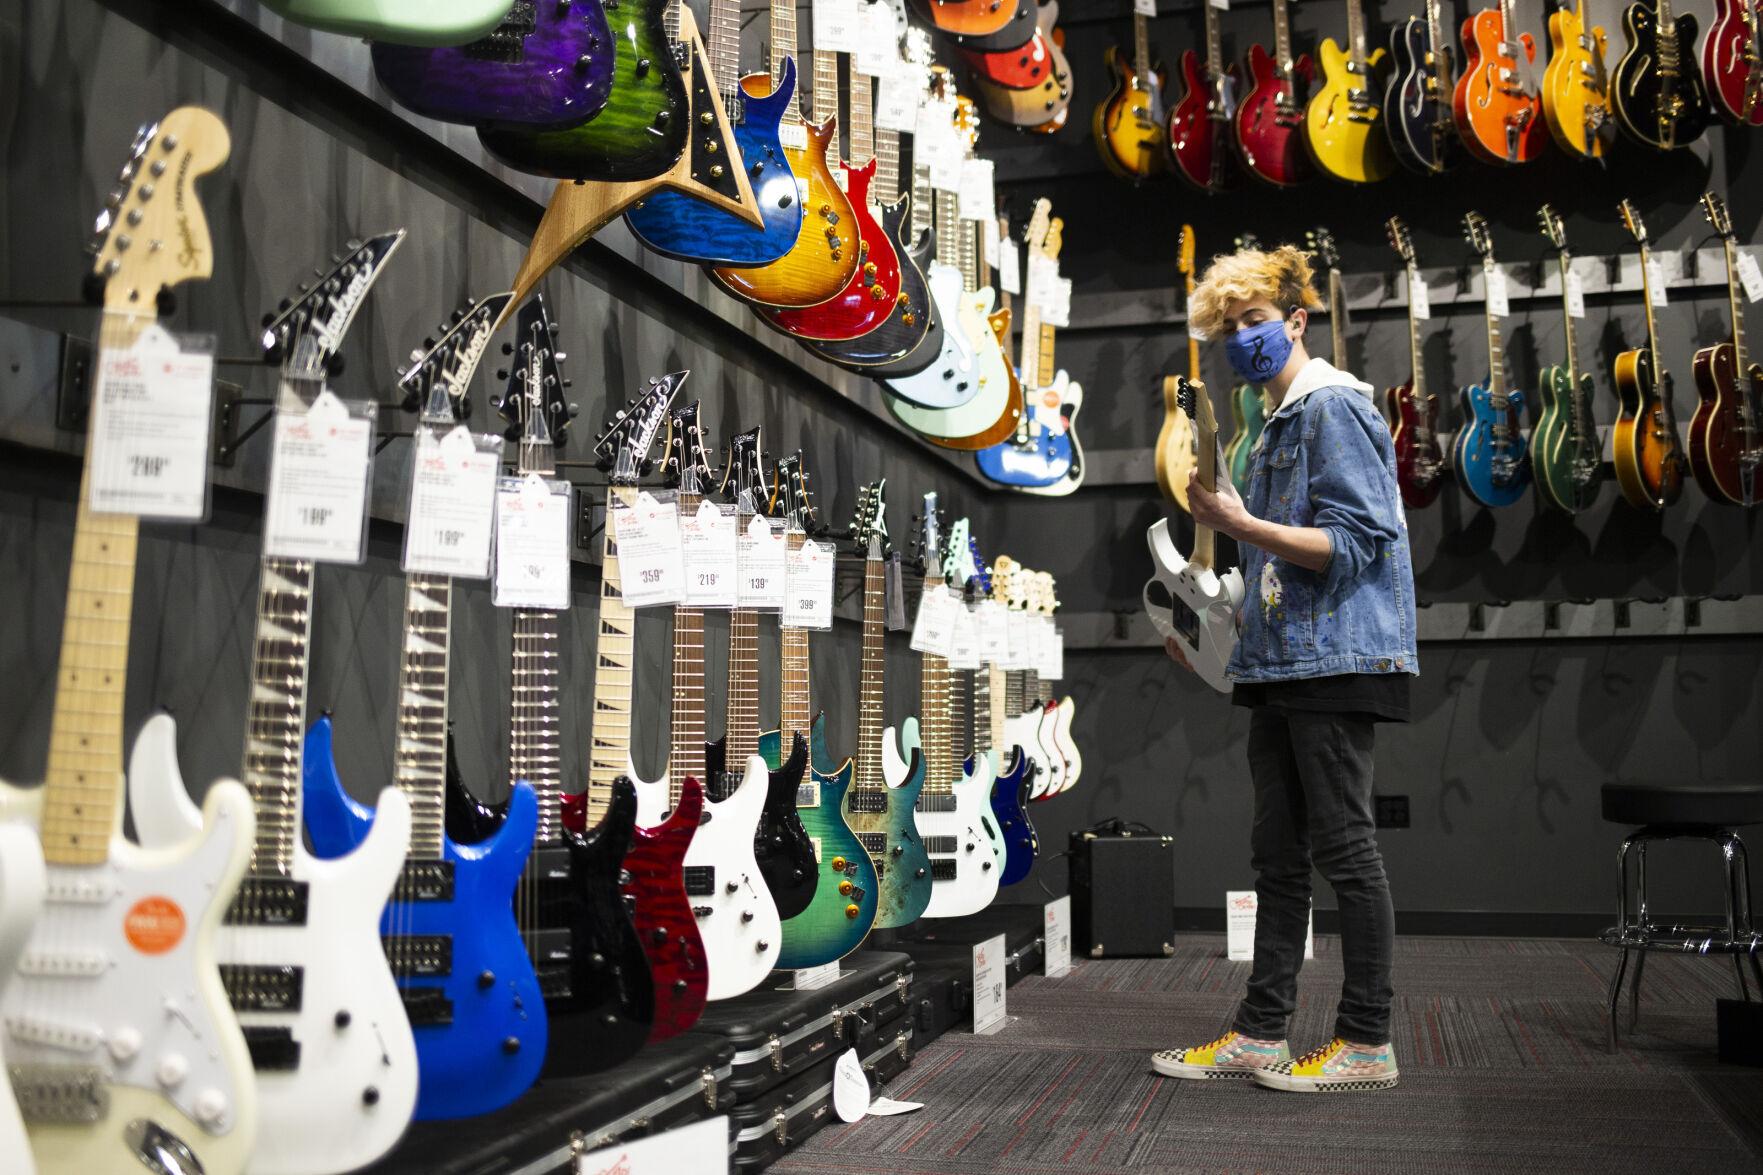 Canadians go crazy for Eldridge guitar with 6 signature color finishes